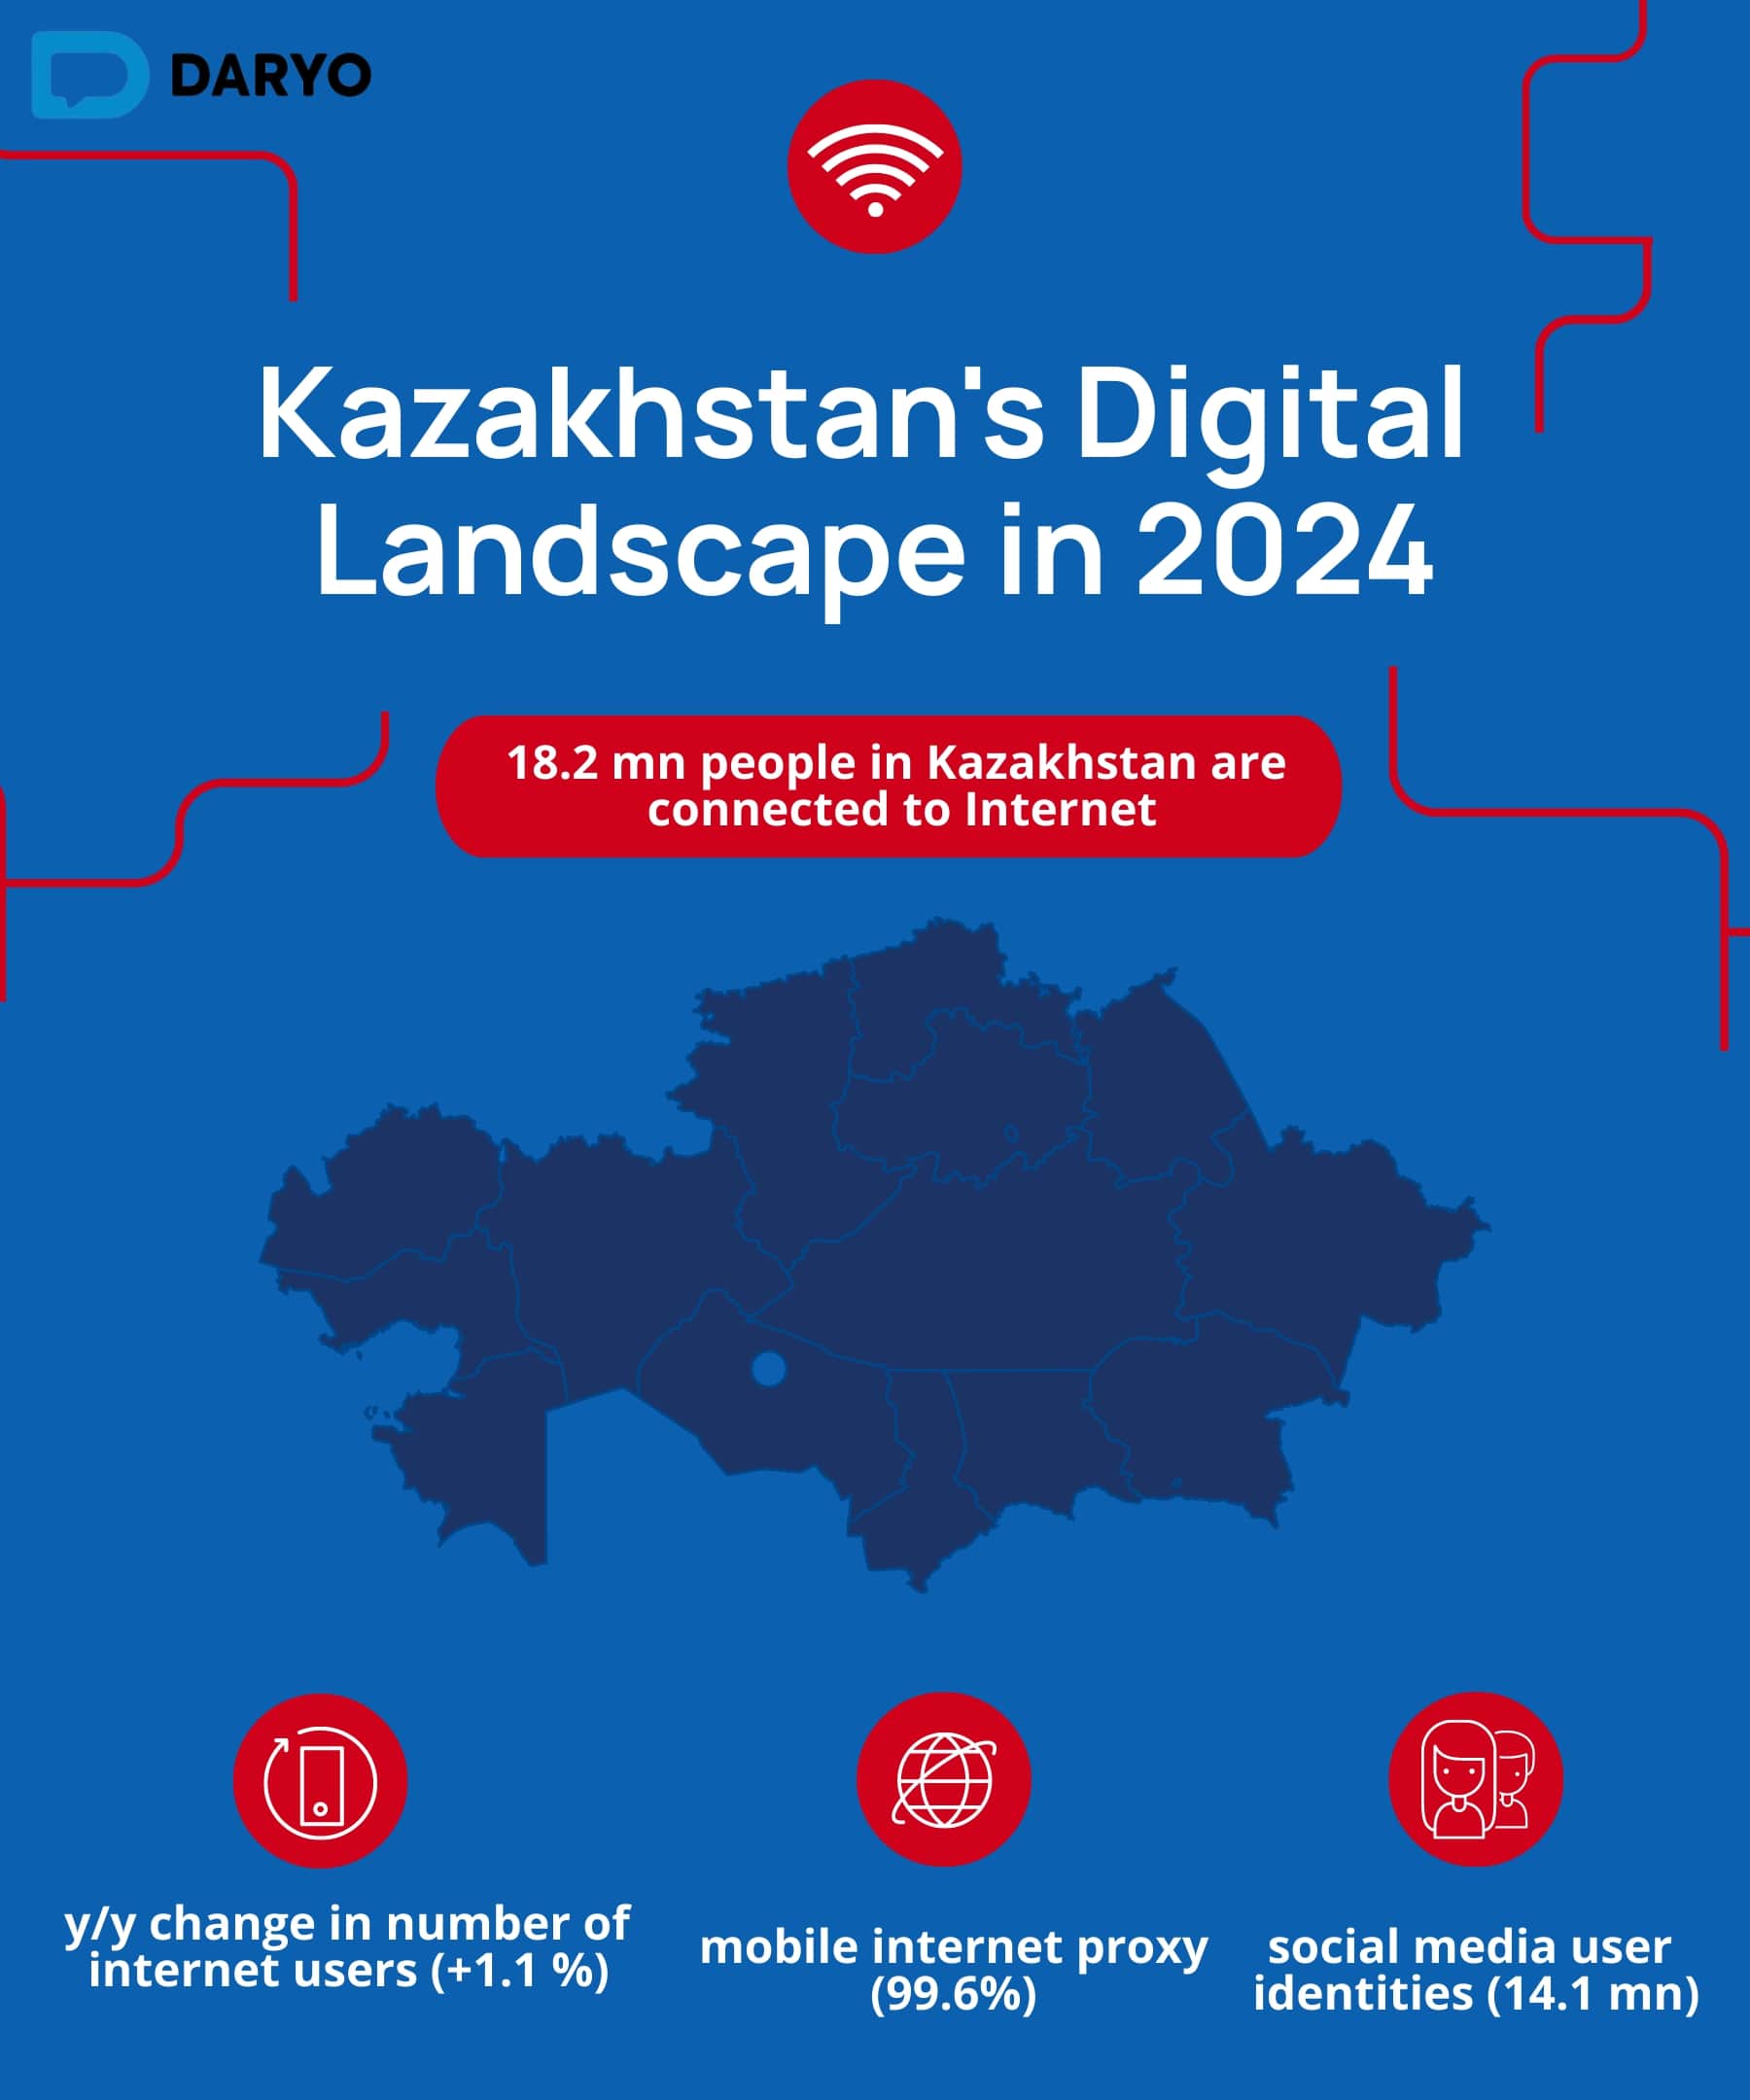 Internet connectivity engulfs 92.3% of Kazakhstan’s population   — Daryo News